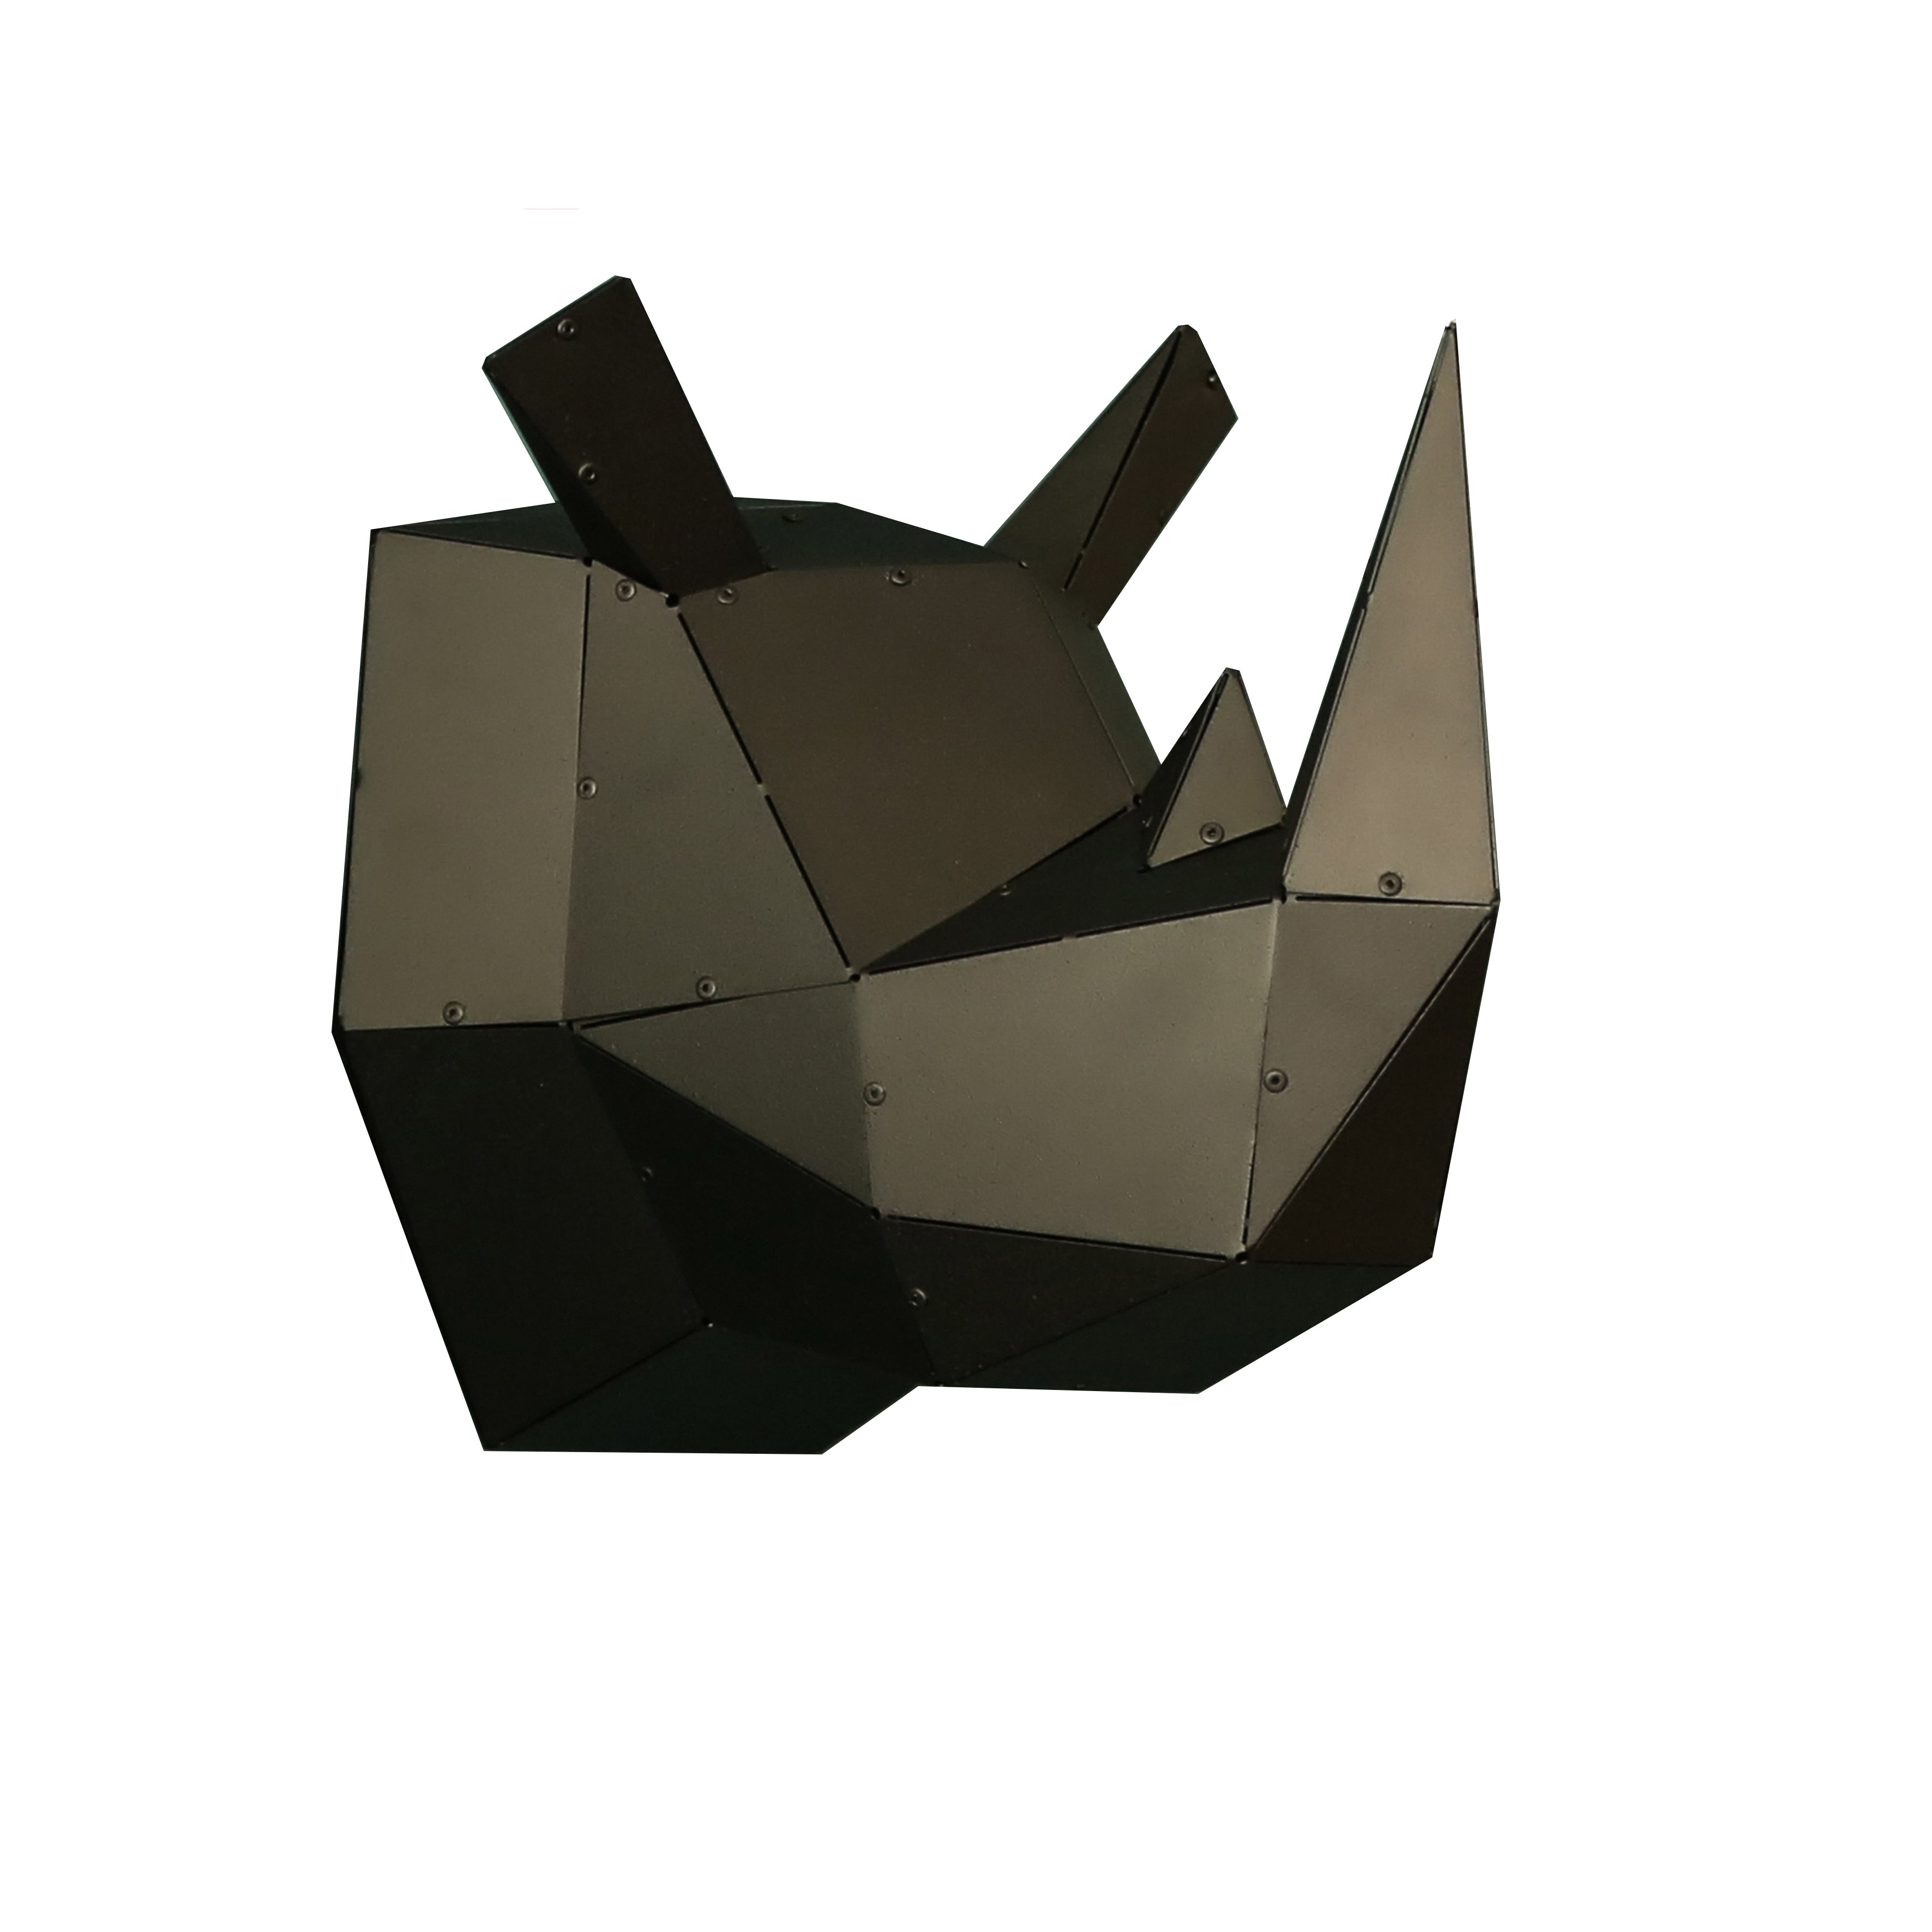 3D Geometric Wall Art of Rhino